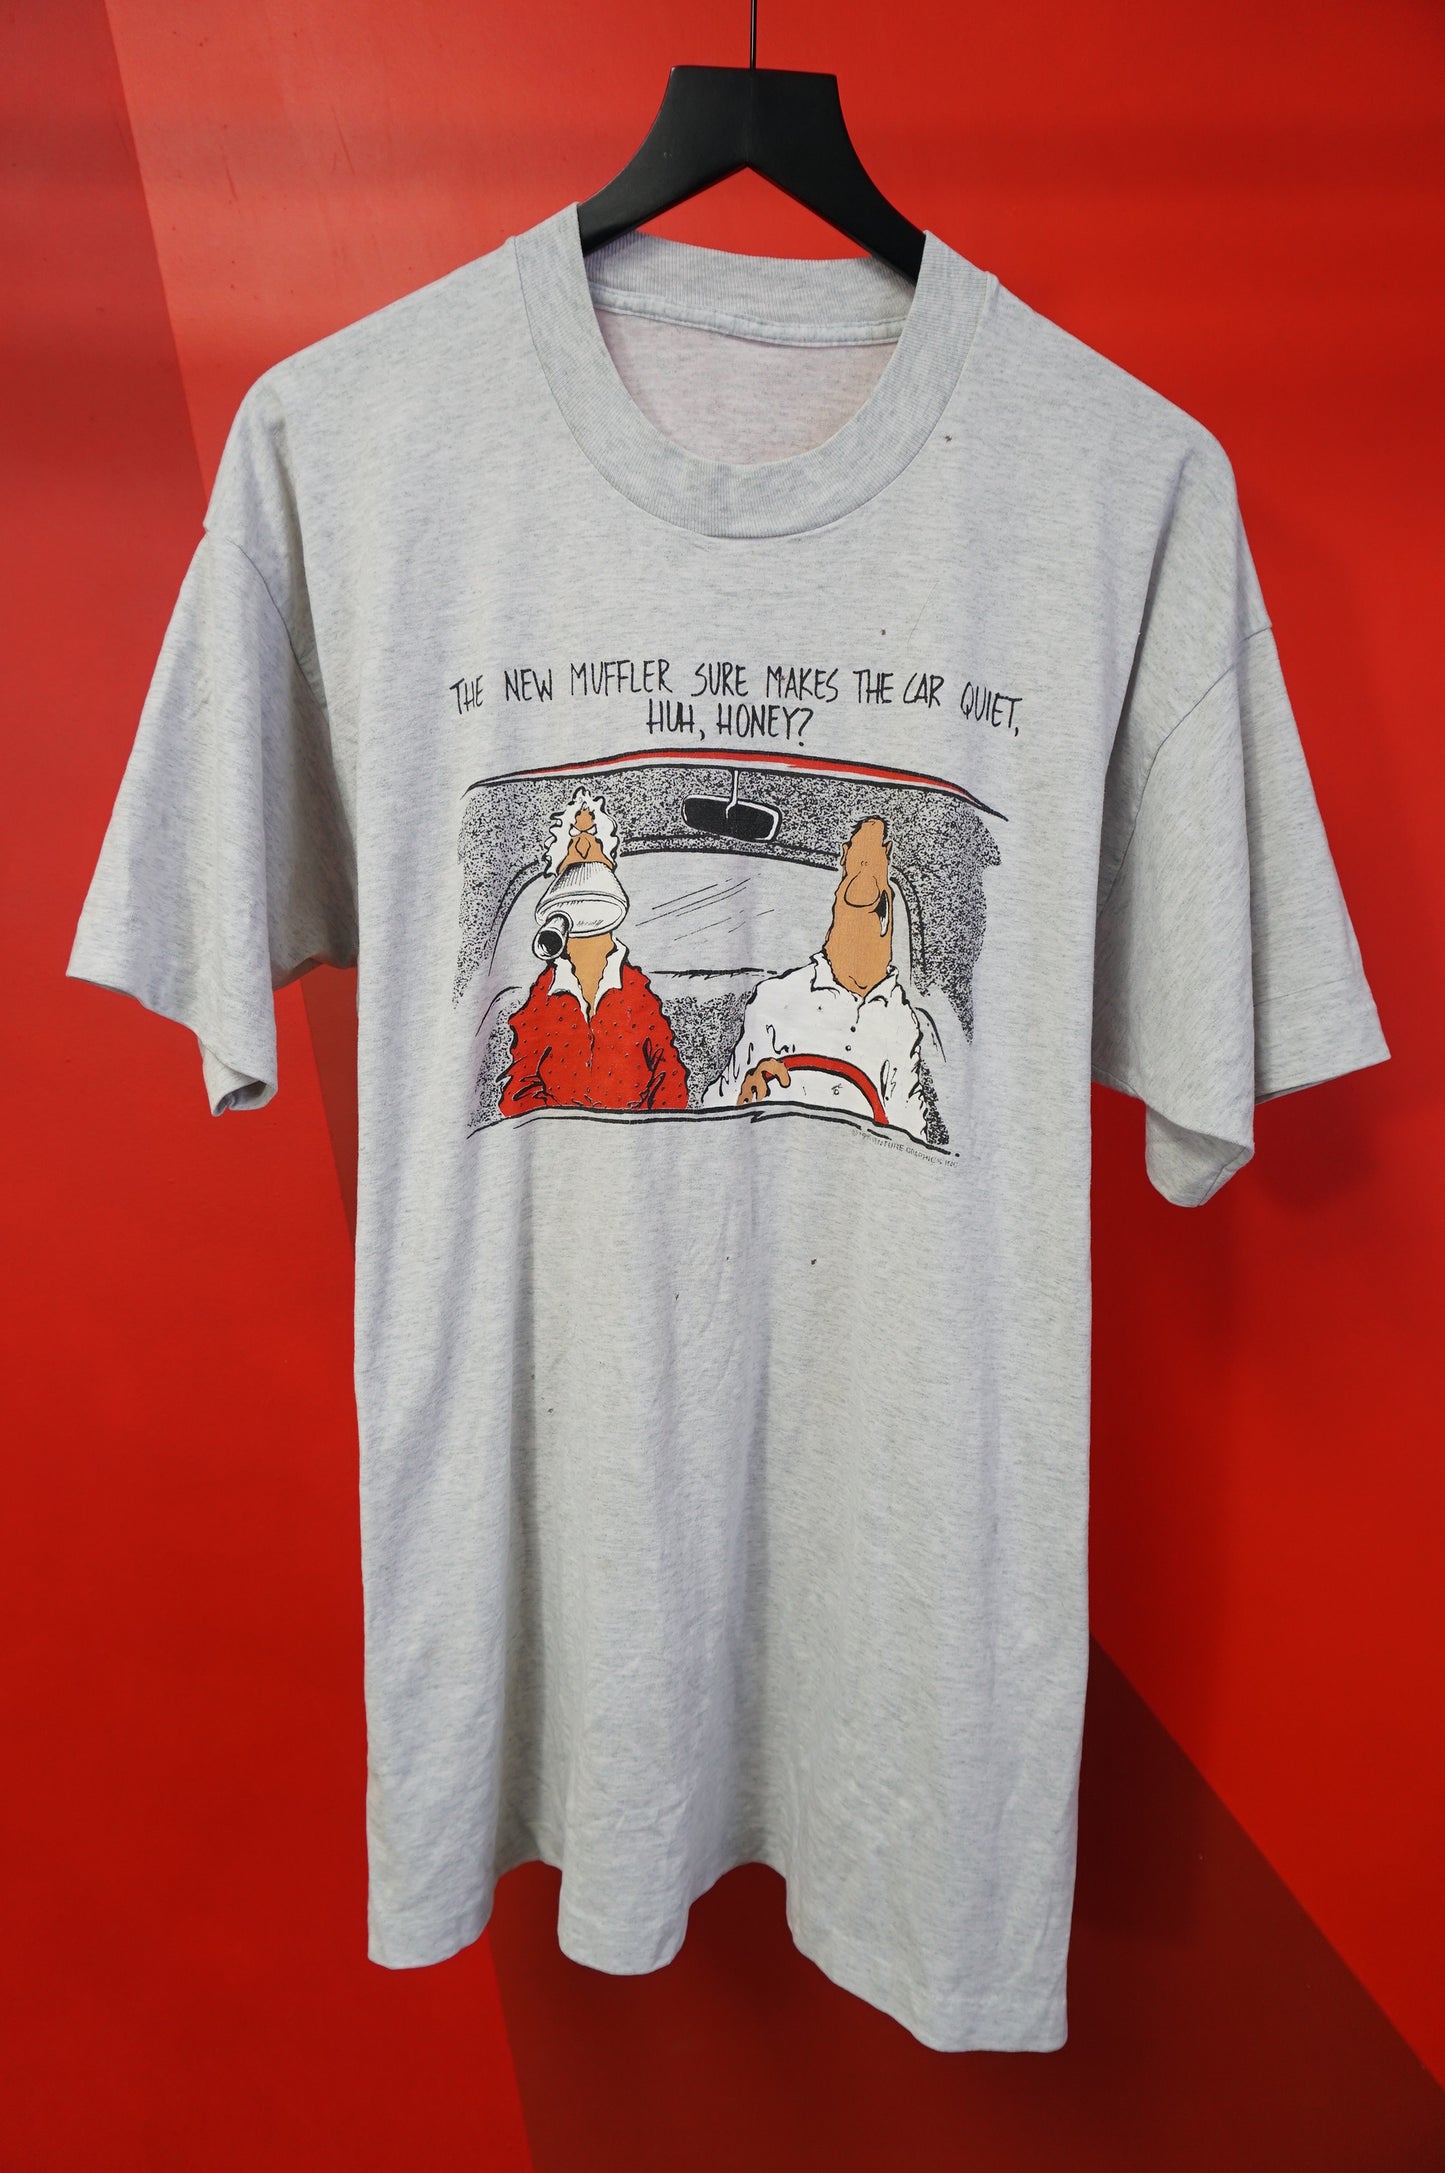 (L) 1992 The New Muffler Sure Makes The Car Quiet! Single Stitch T-Shirt